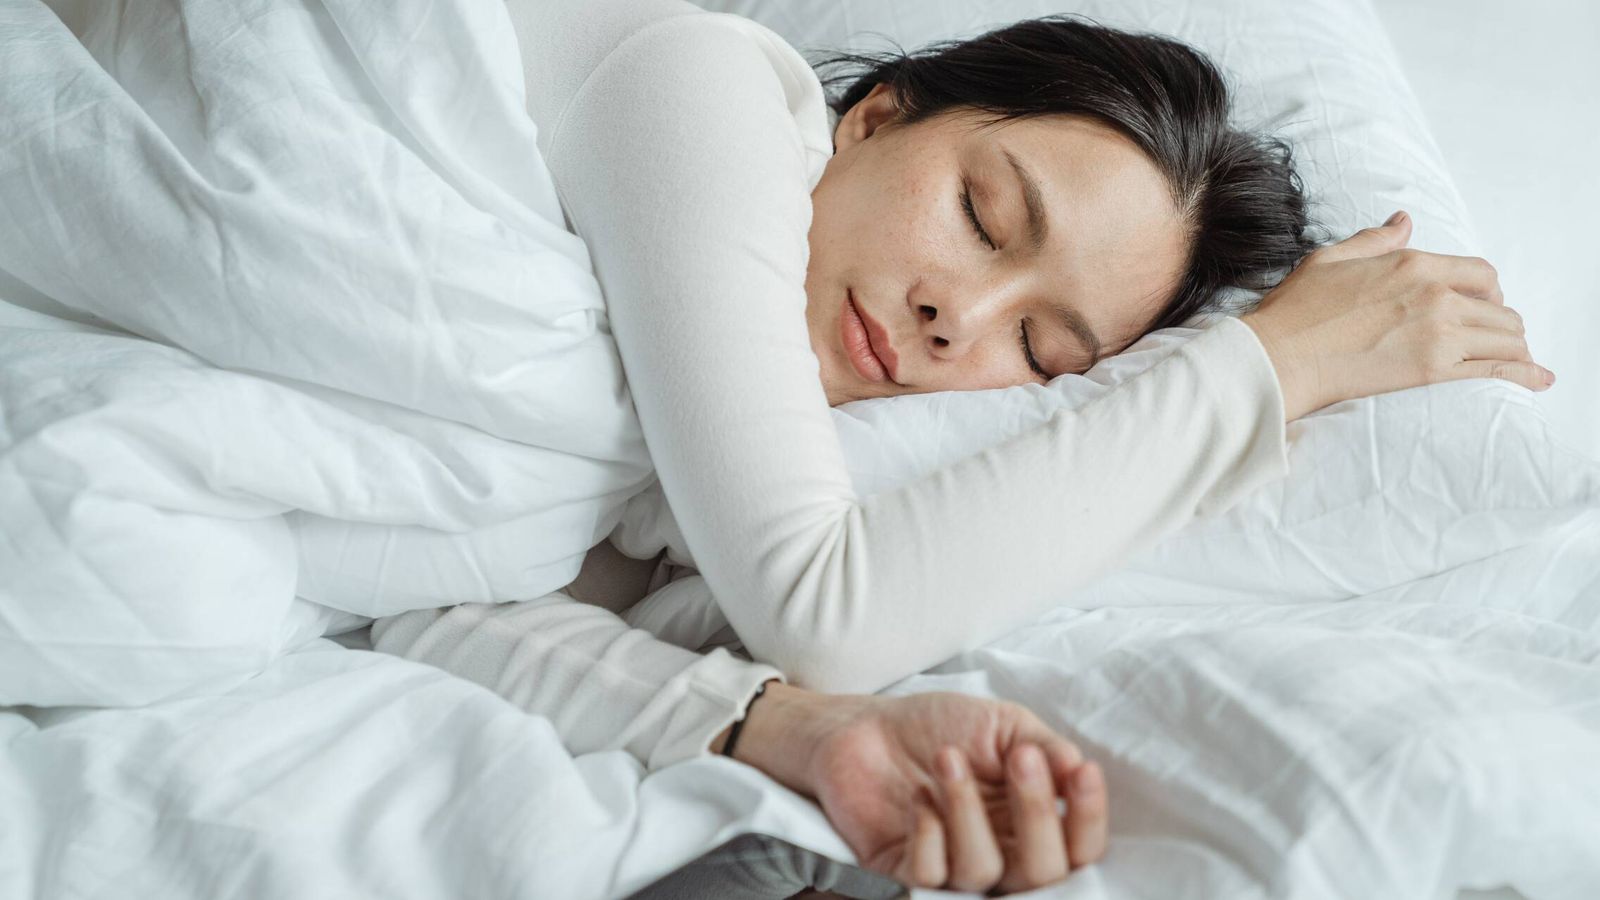 La siesta reduce en un 37% el nivel de estrés. (Pexels/Ketut Subiyanto)